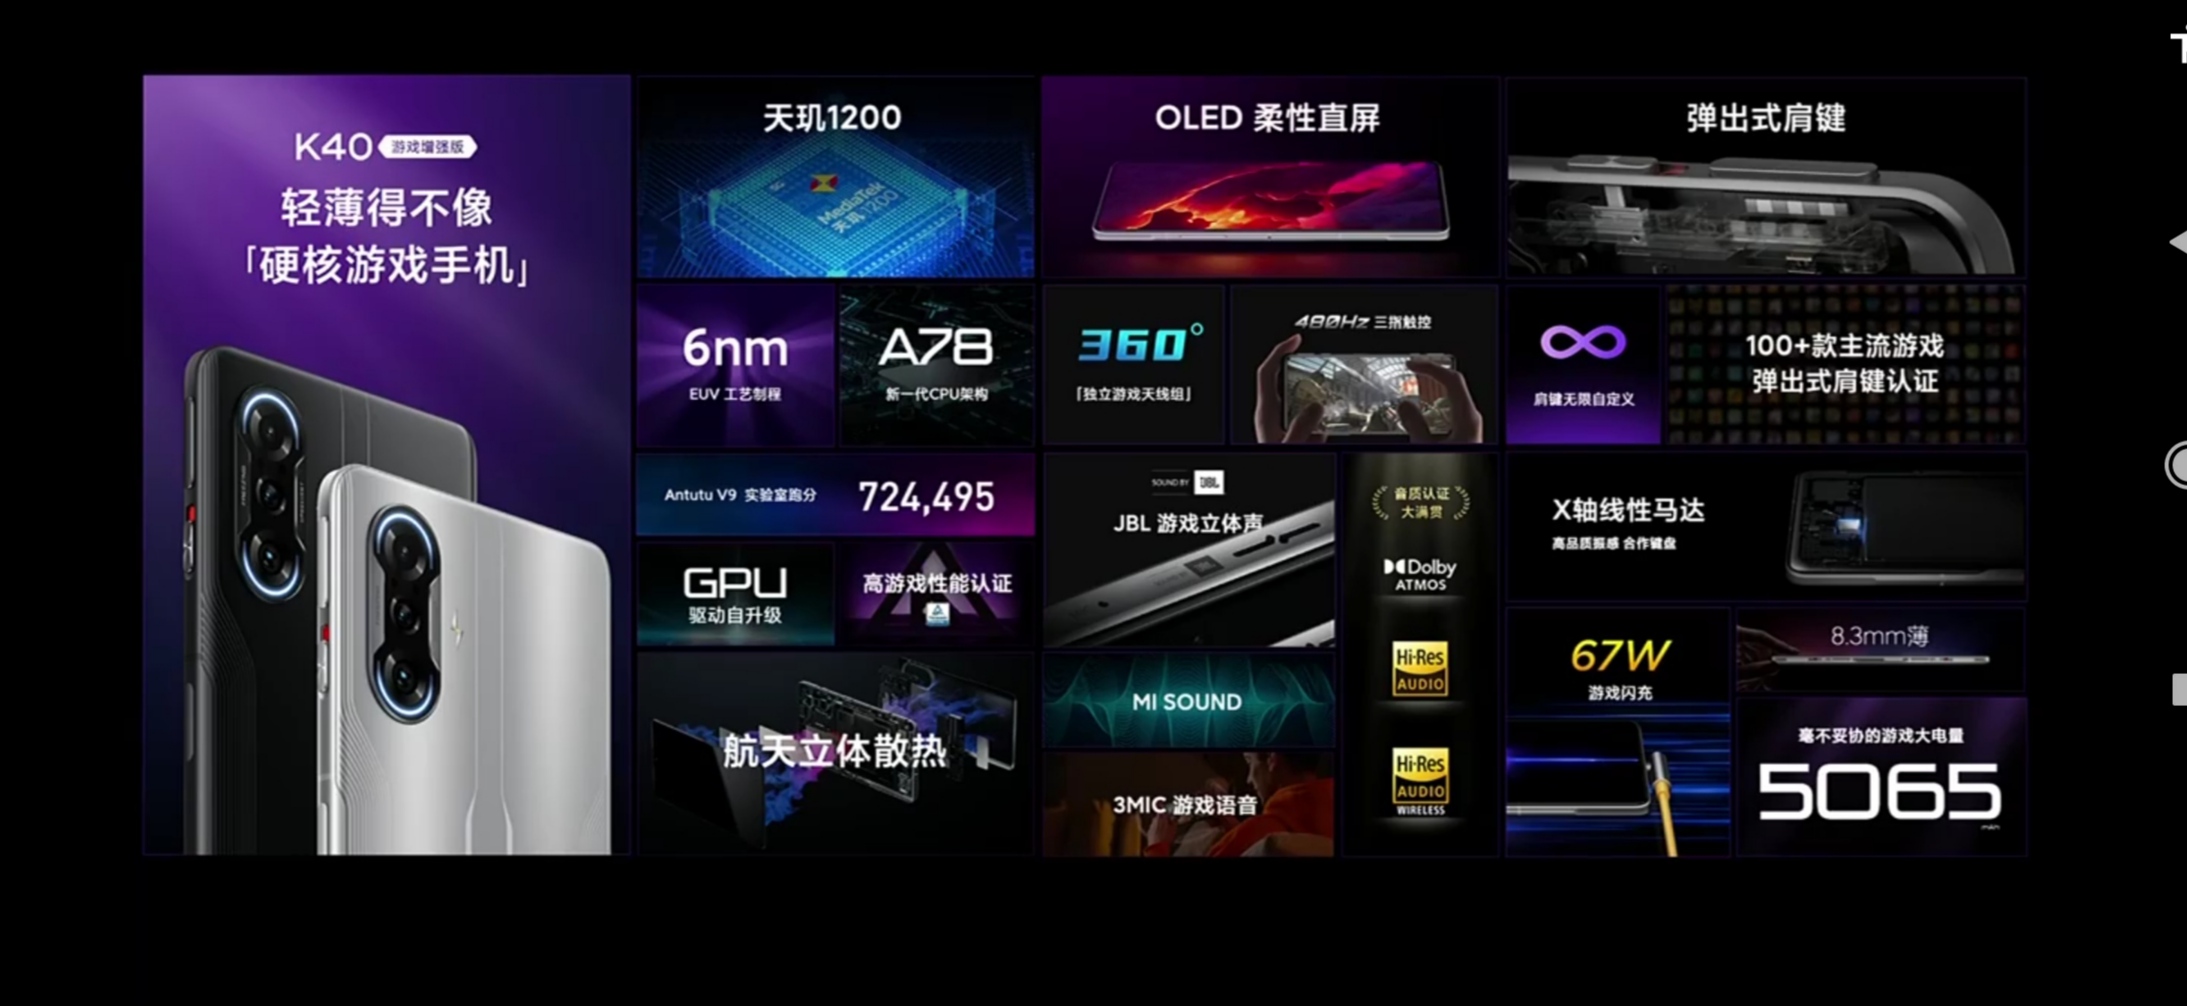 Xiaomi k40 gaming edition. Xiaomi Redmi k40 Gaming. Редми к40 гейминг эдишн. Xiaomi Redmi 40 game enhanced Edition. Redmi k40 характеристики.